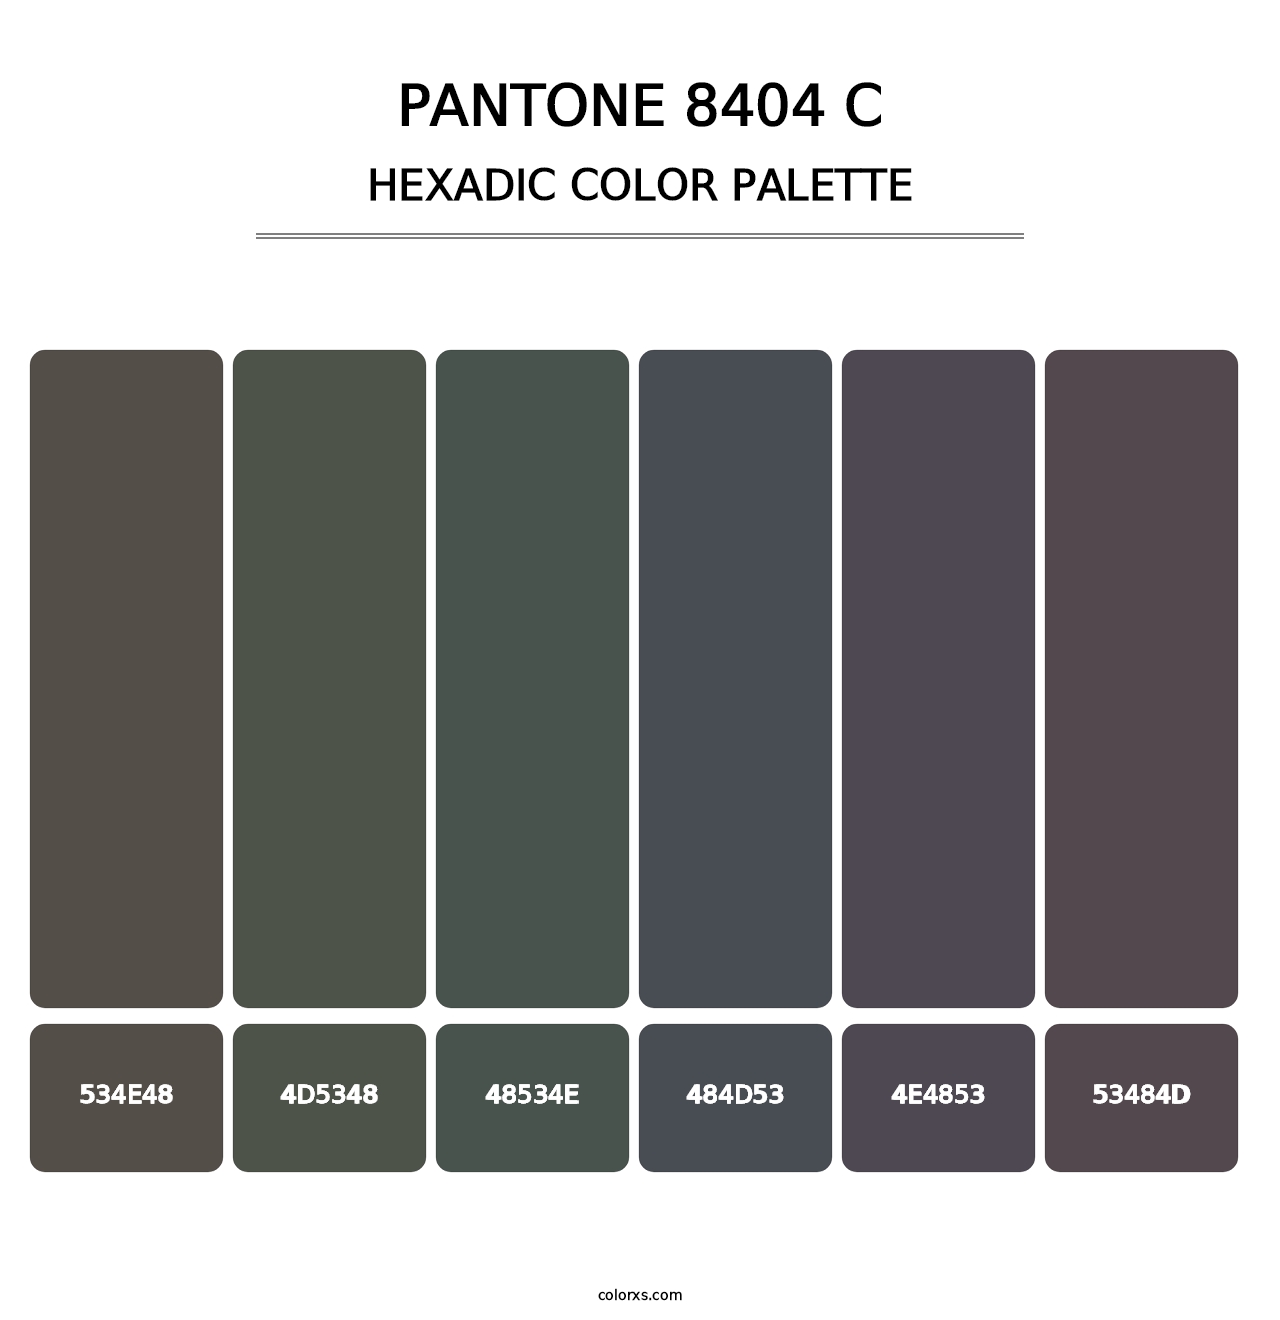 PANTONE 8404 C - Hexadic Color Palette